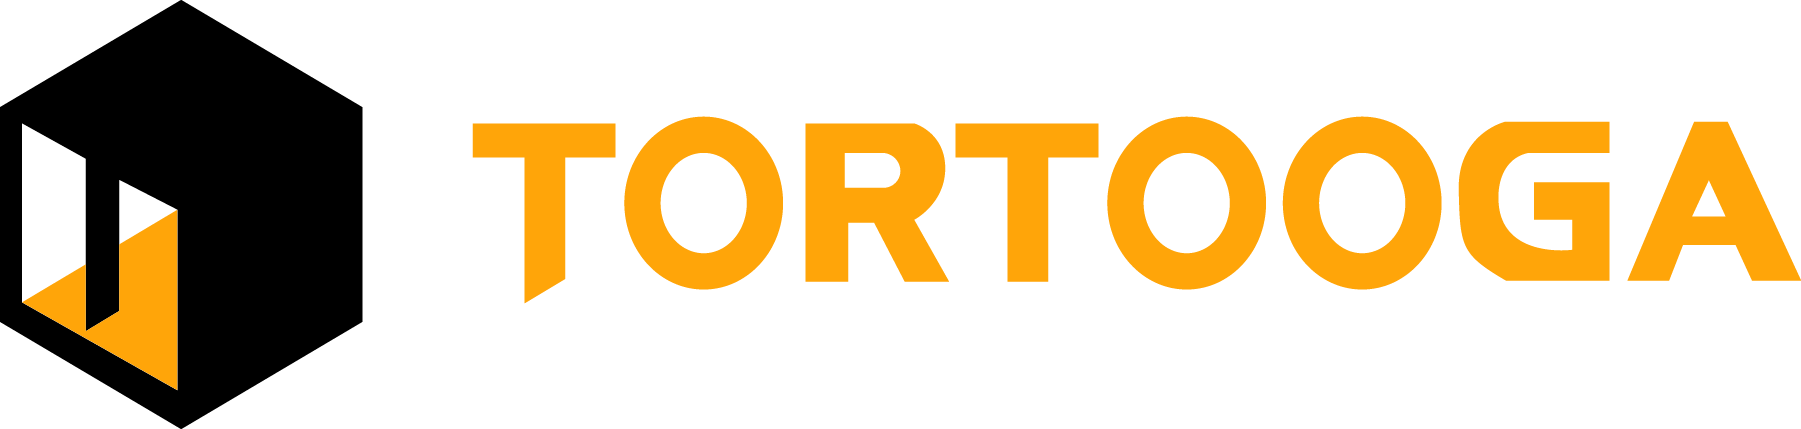 Tortooga logo | DevOps services from Exigo Tech Philippines 